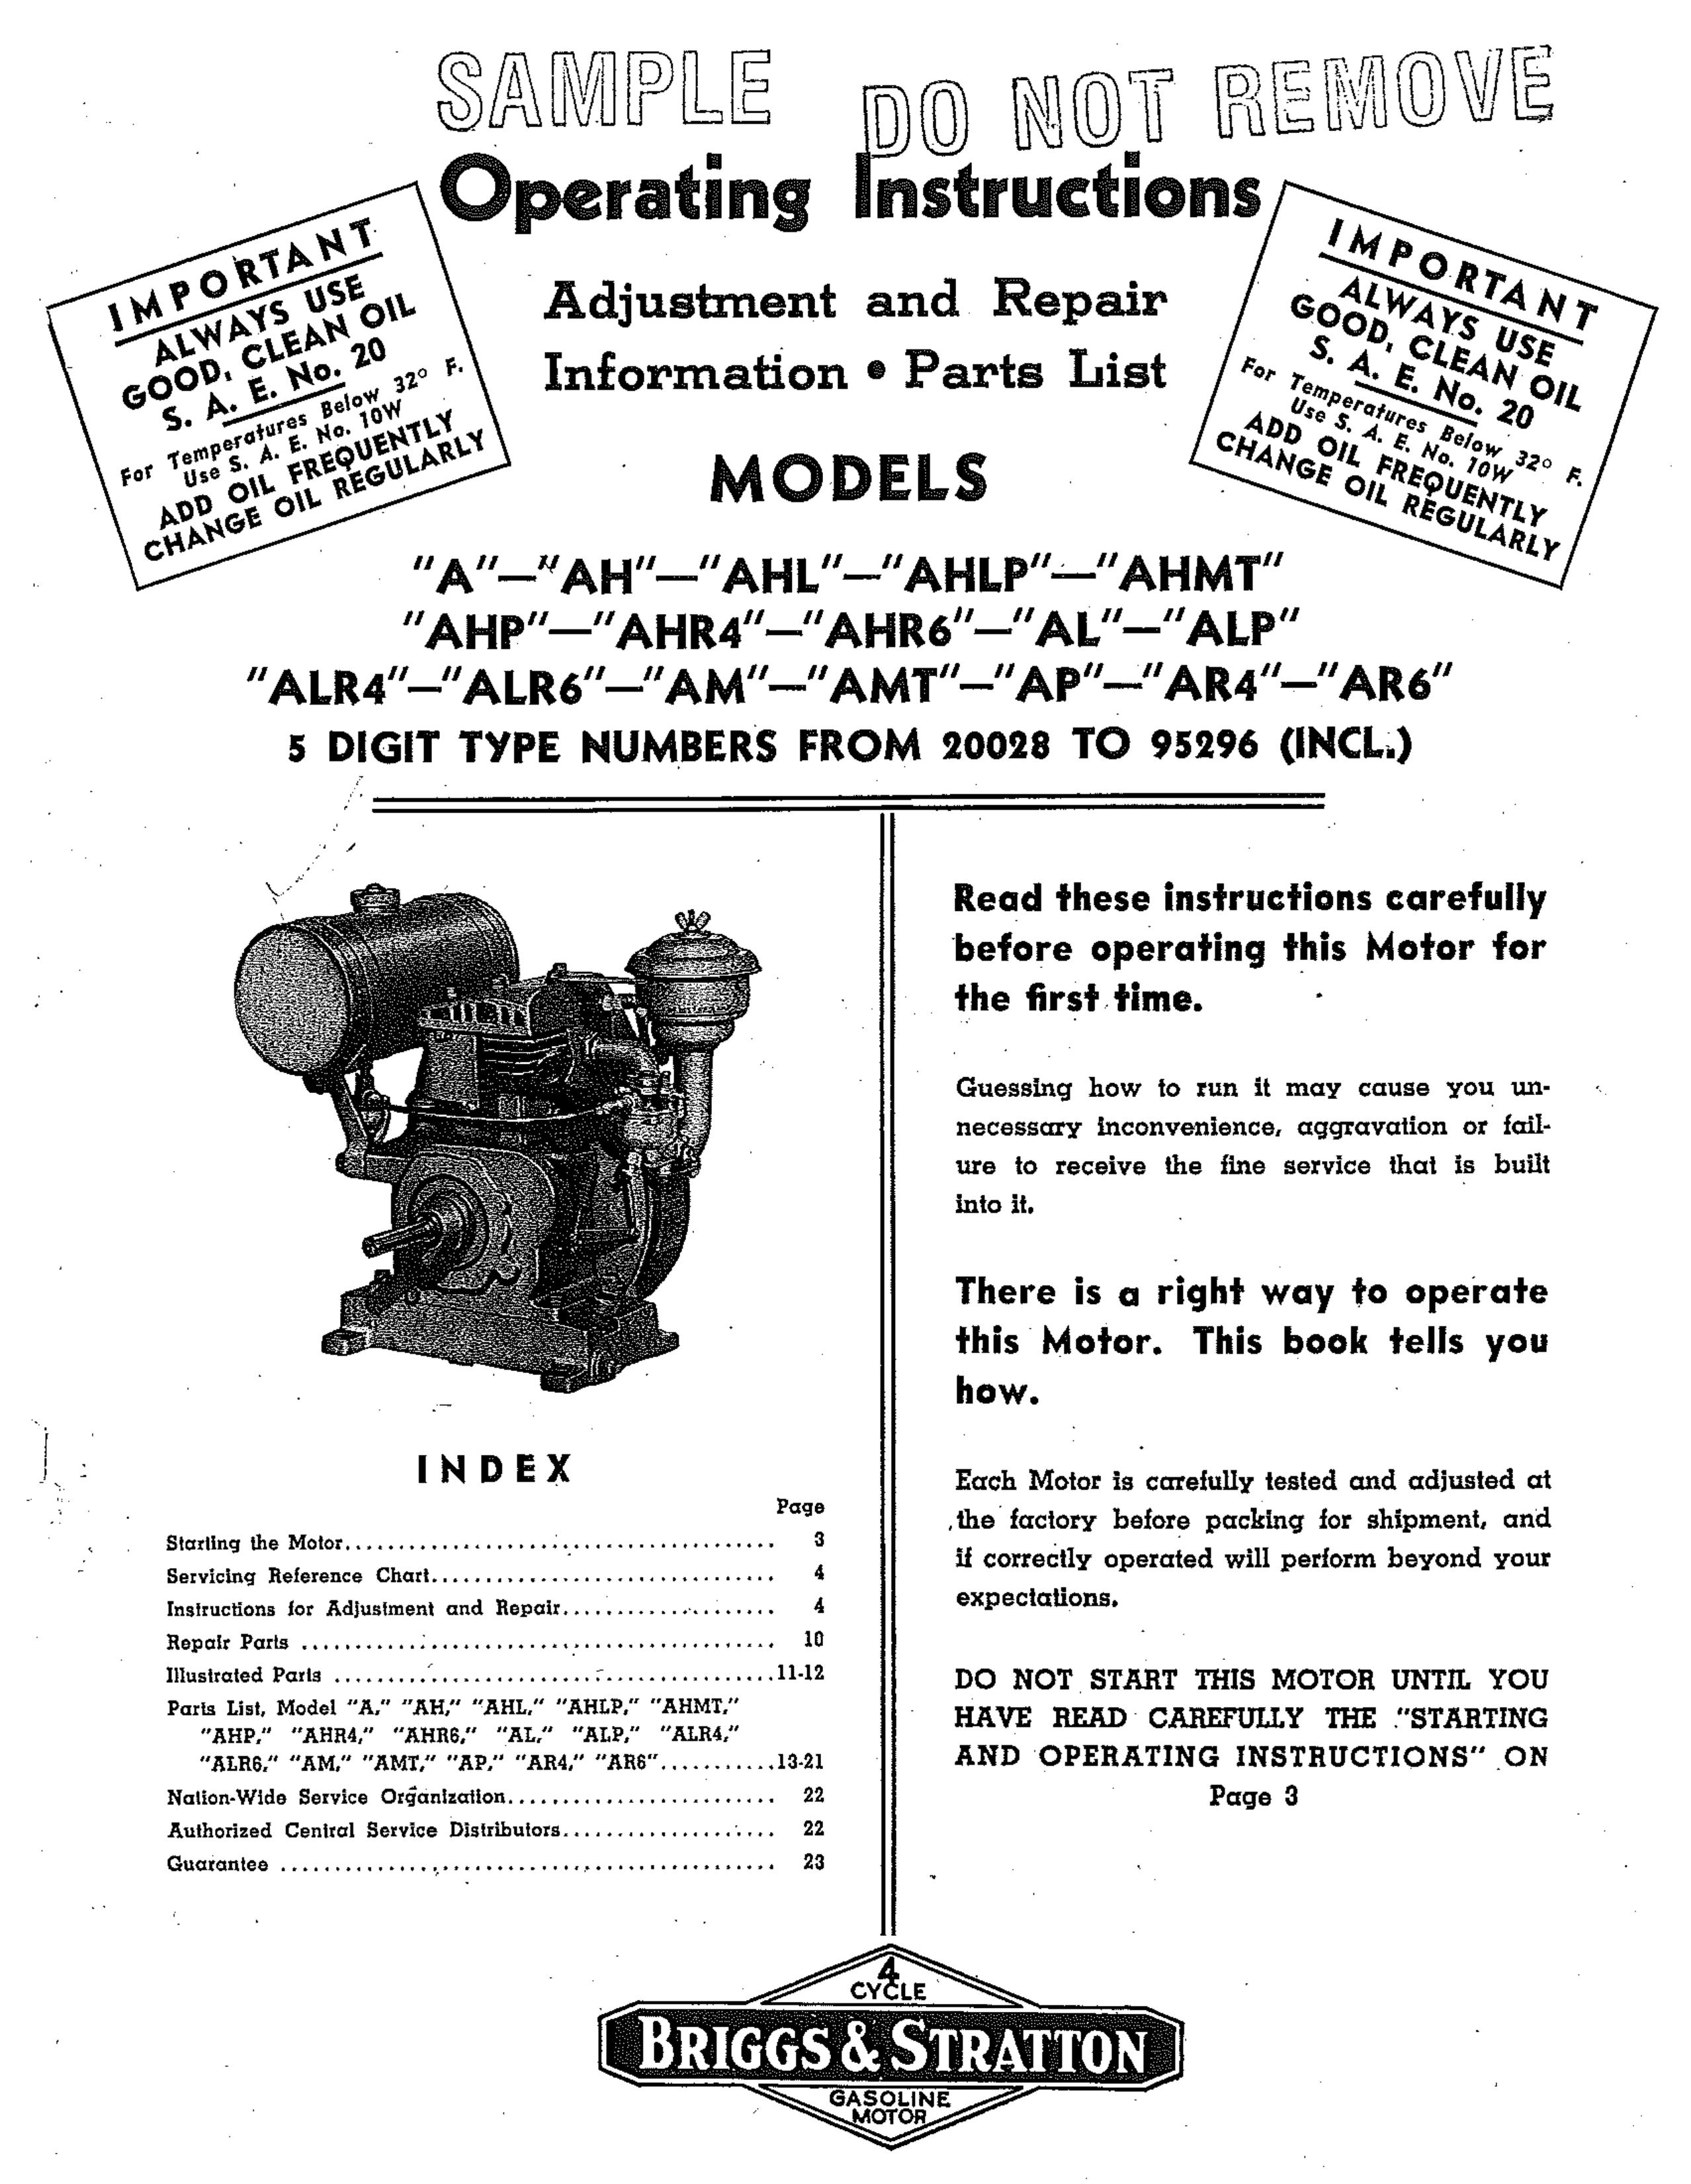 Briggs & Stratton AR4 Outboard Motor User Manual